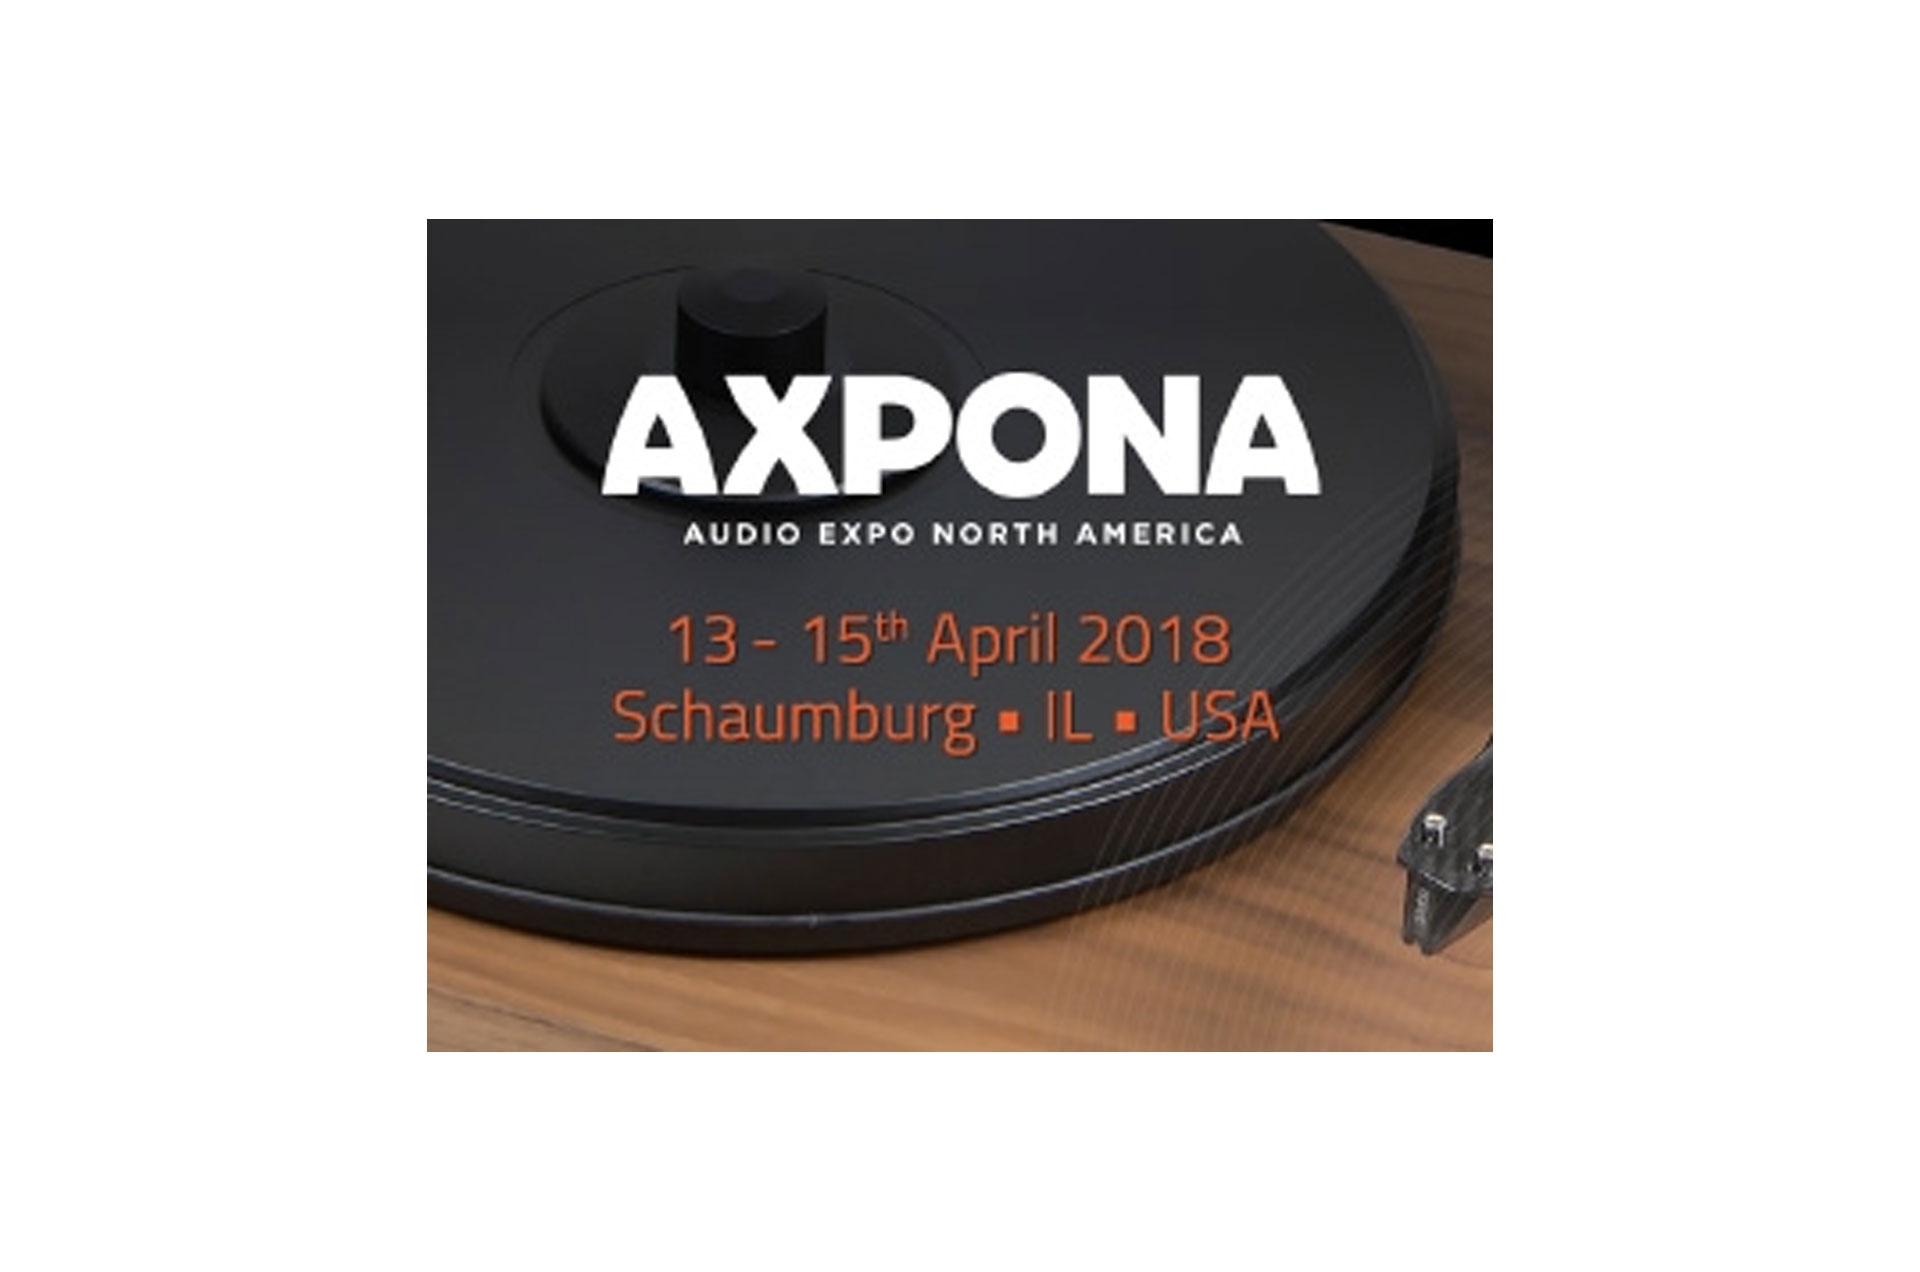 AXPONA Audio Expo North America